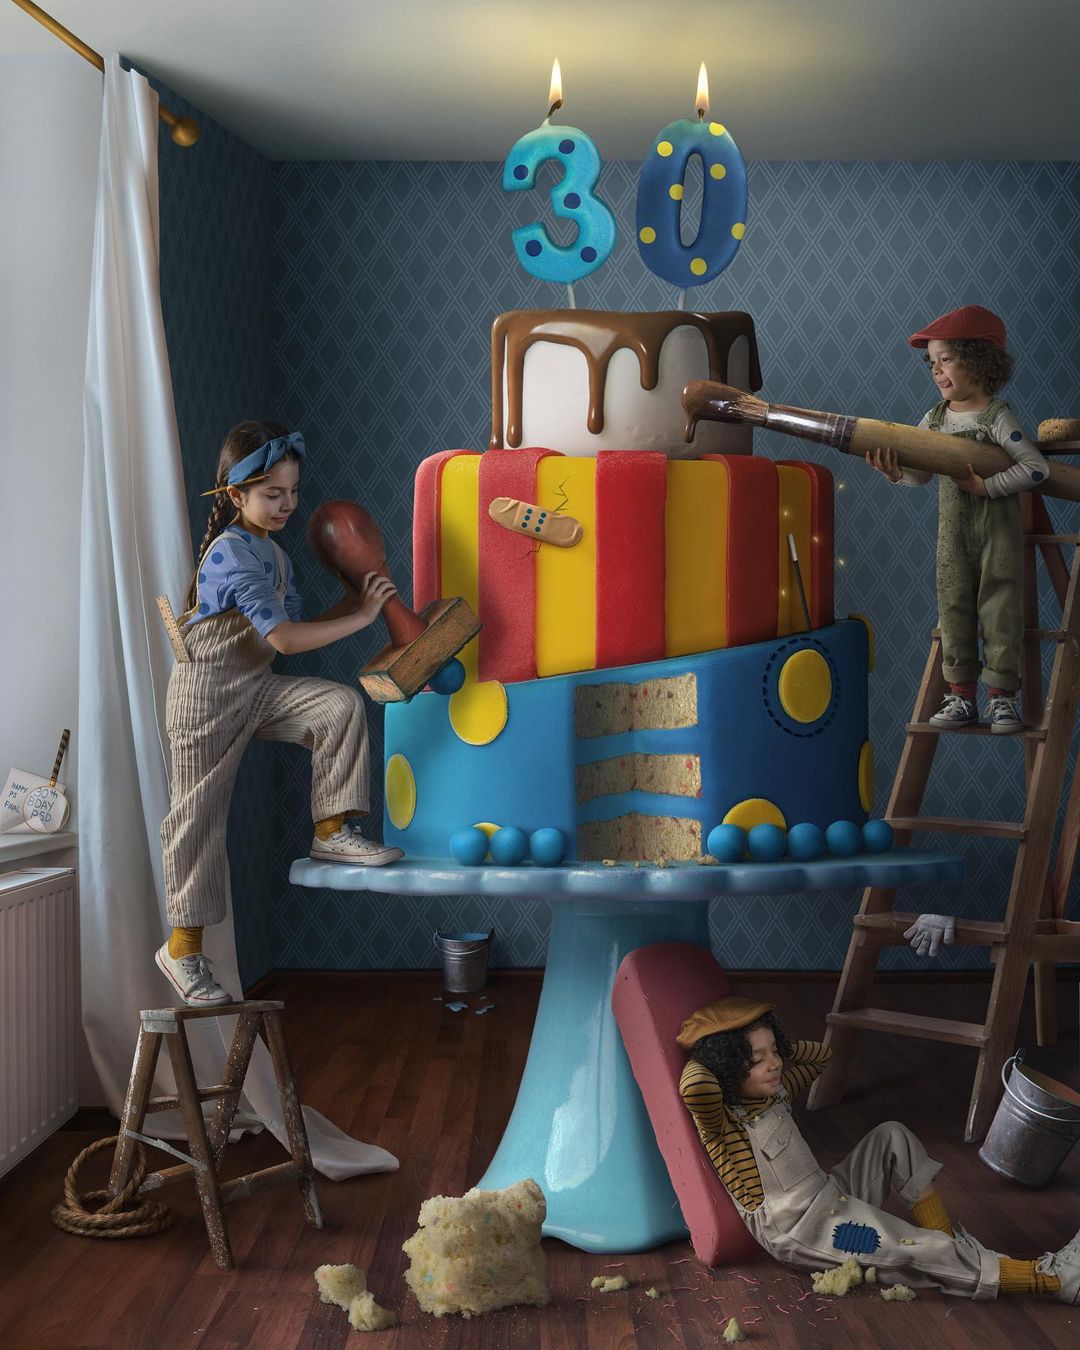 surreal photomanipulation celebrate cake by vanessa rivera